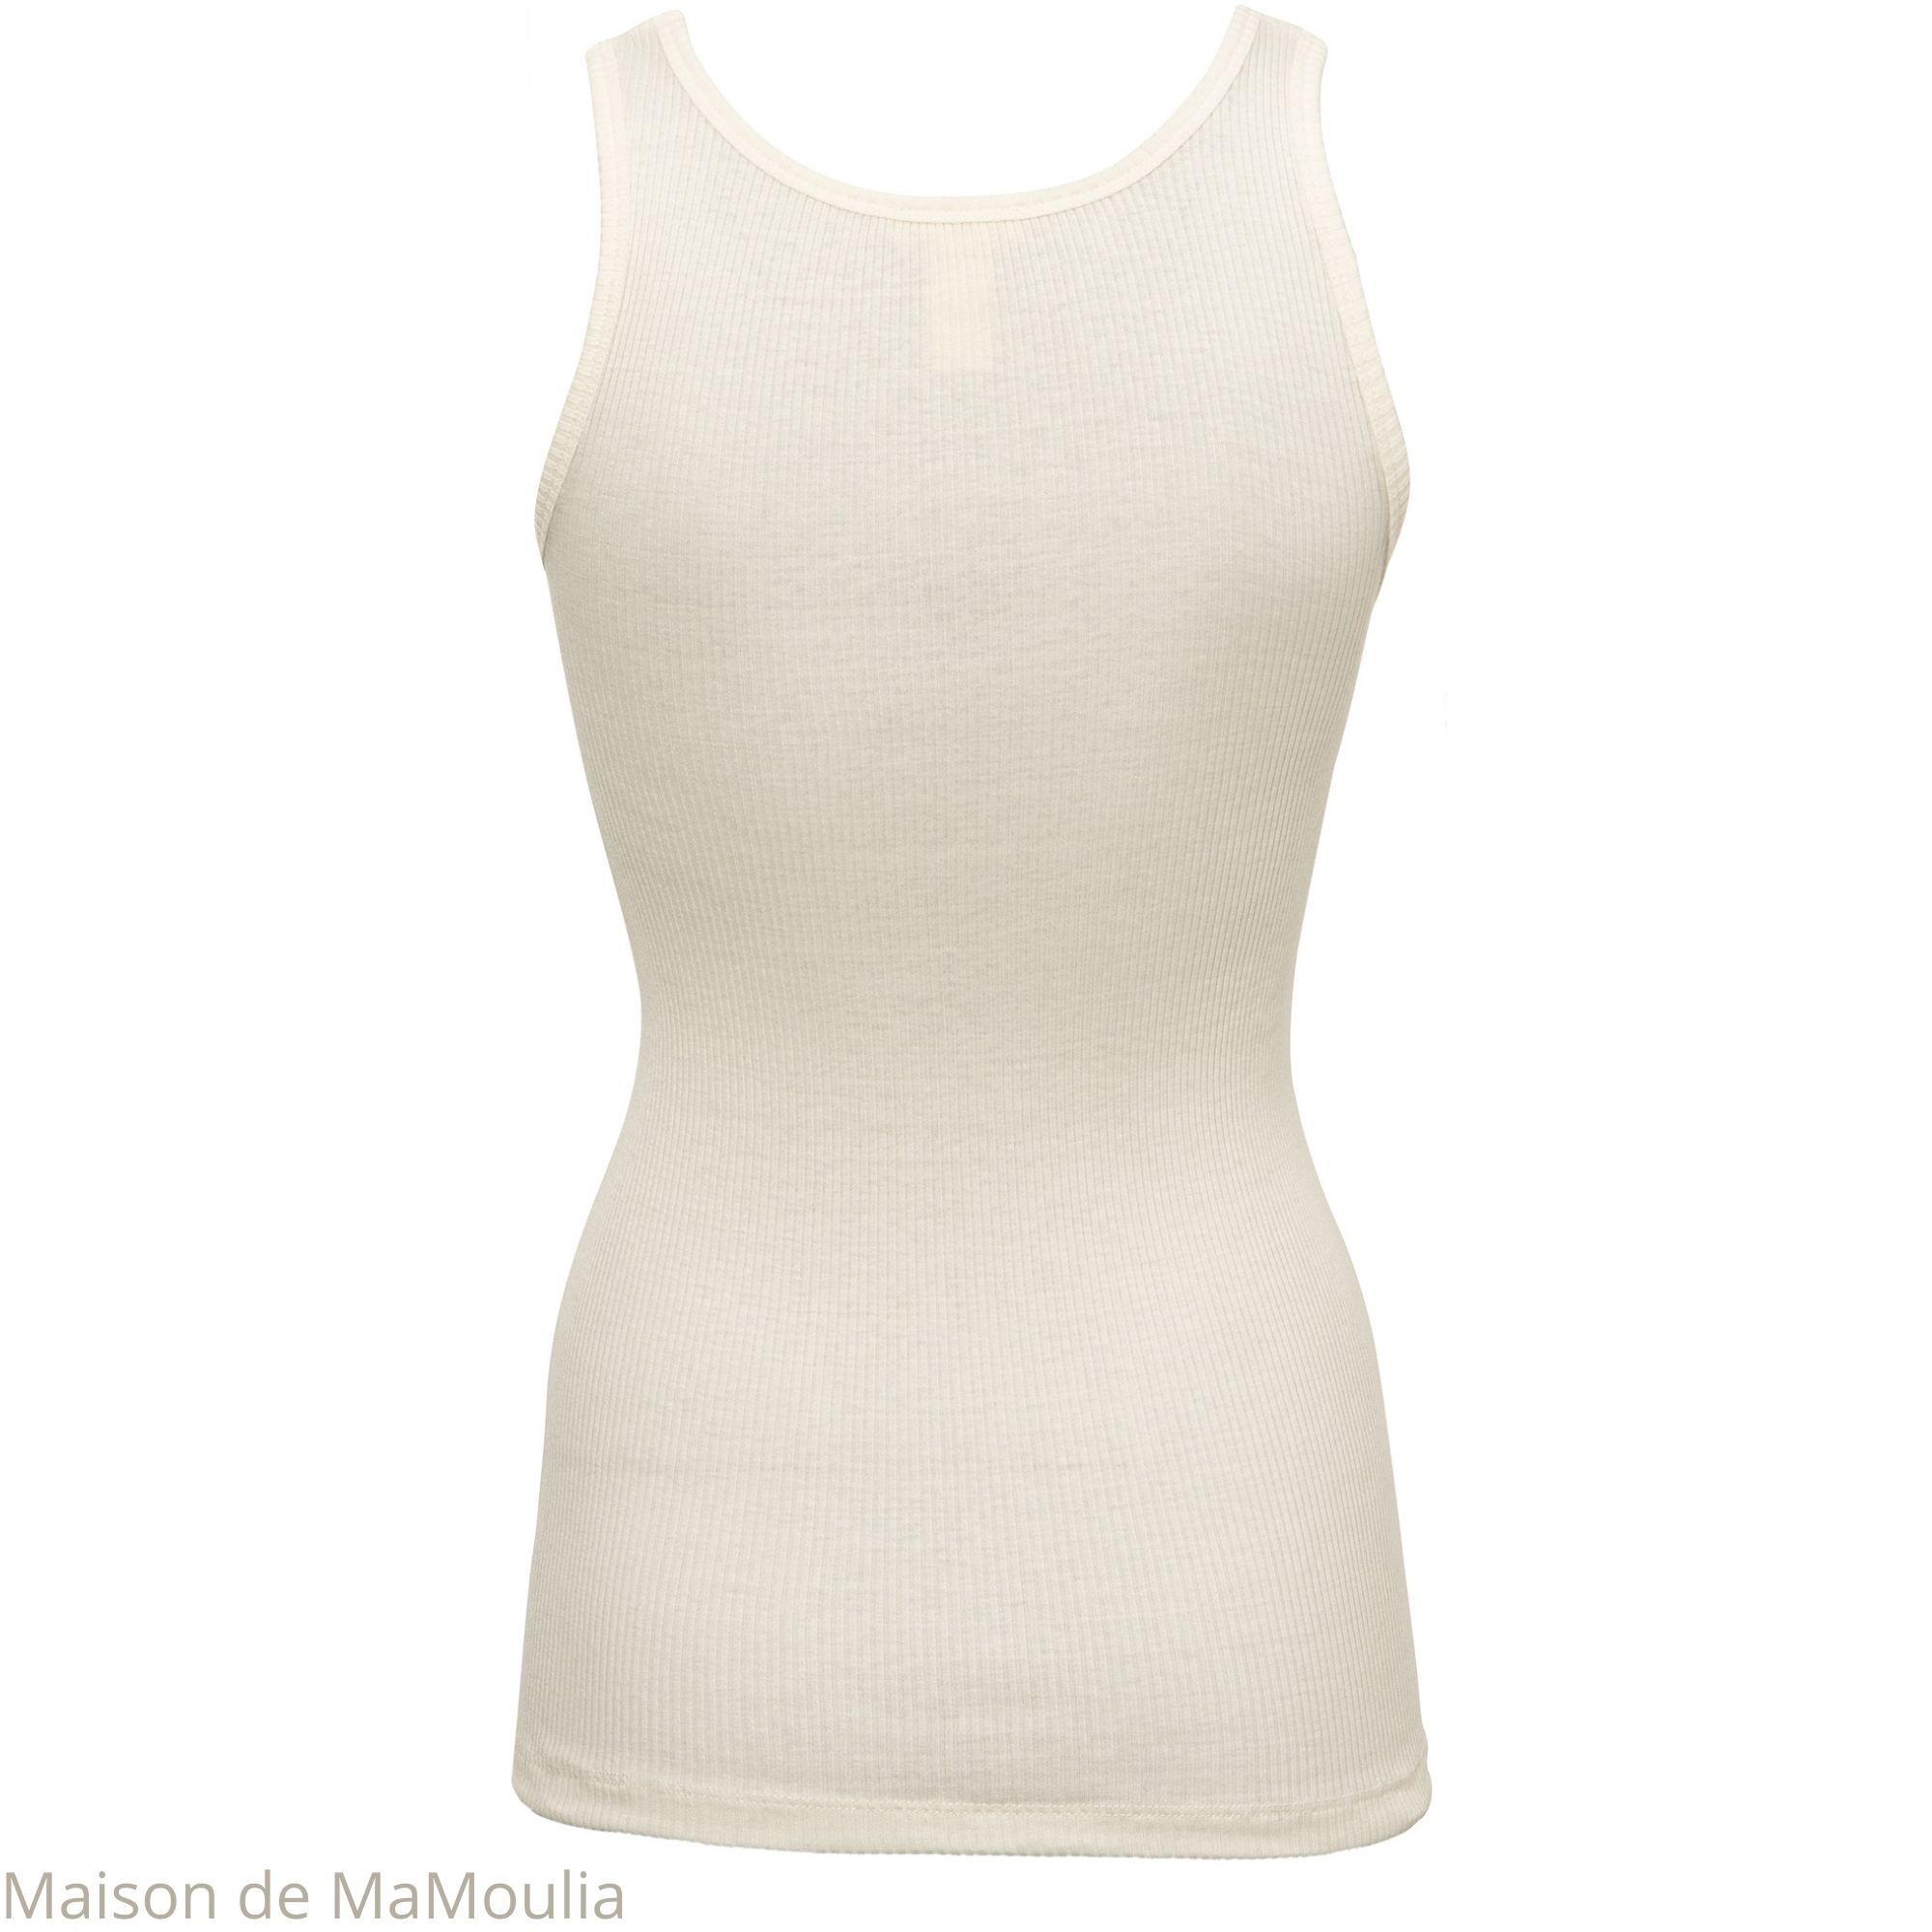 Gudrun-tshirt-debardeur-sans-manches-femme-soie-coton-minimalisma-maison-de-mamoulia-blanc- ecru